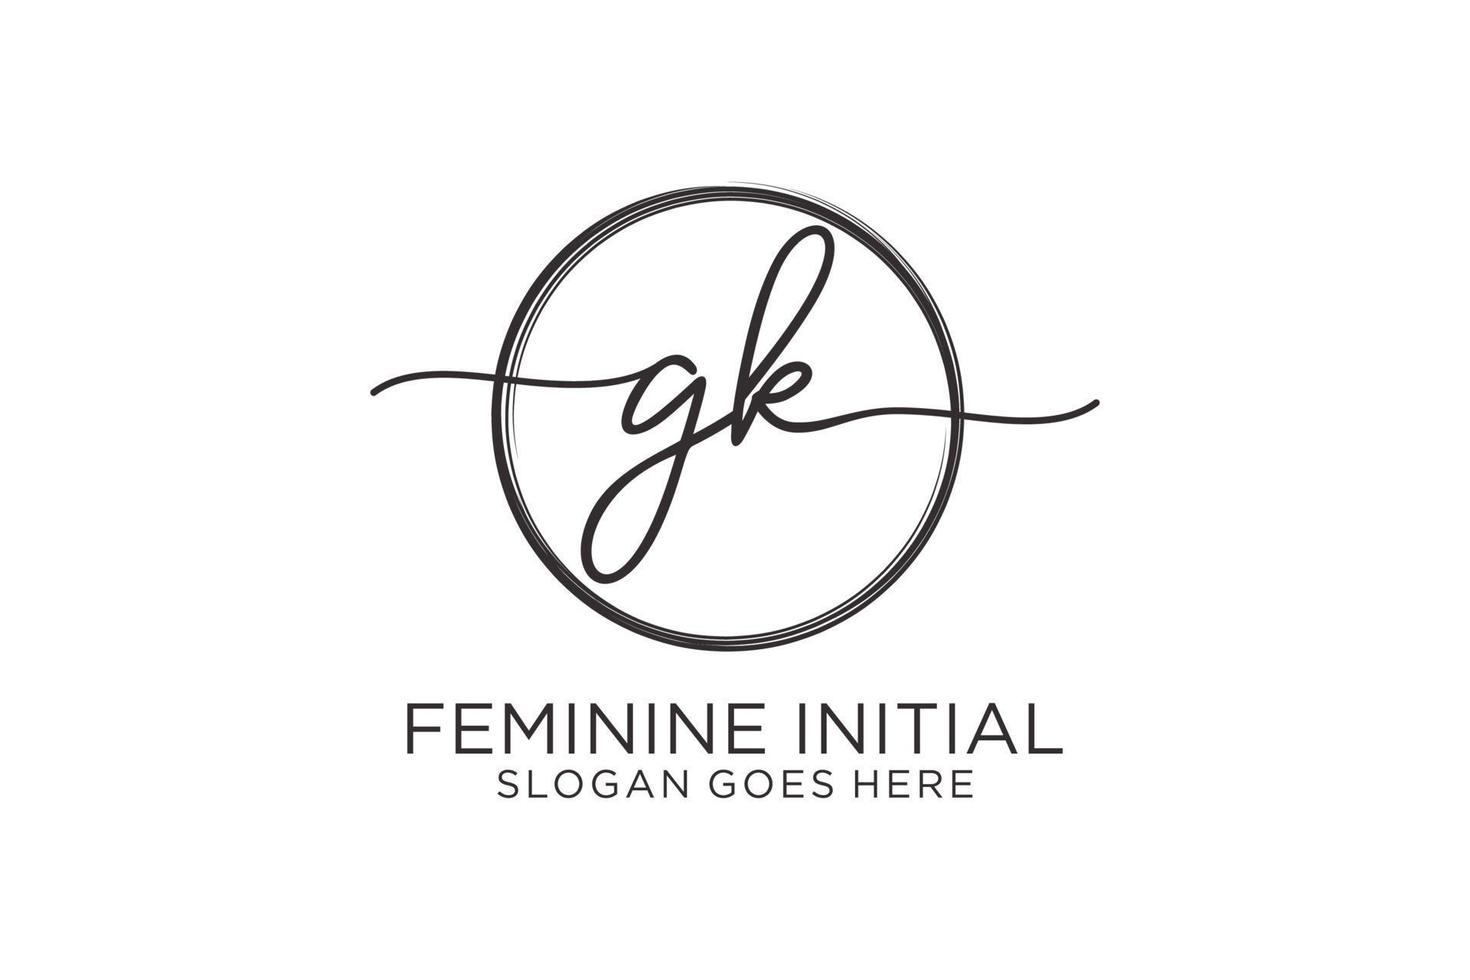 logotipo inicial de escritura gk con plantilla de círculo logotipo vectorial de firma inicial, boda, moda, floral y botánica con plantilla creativa. vector